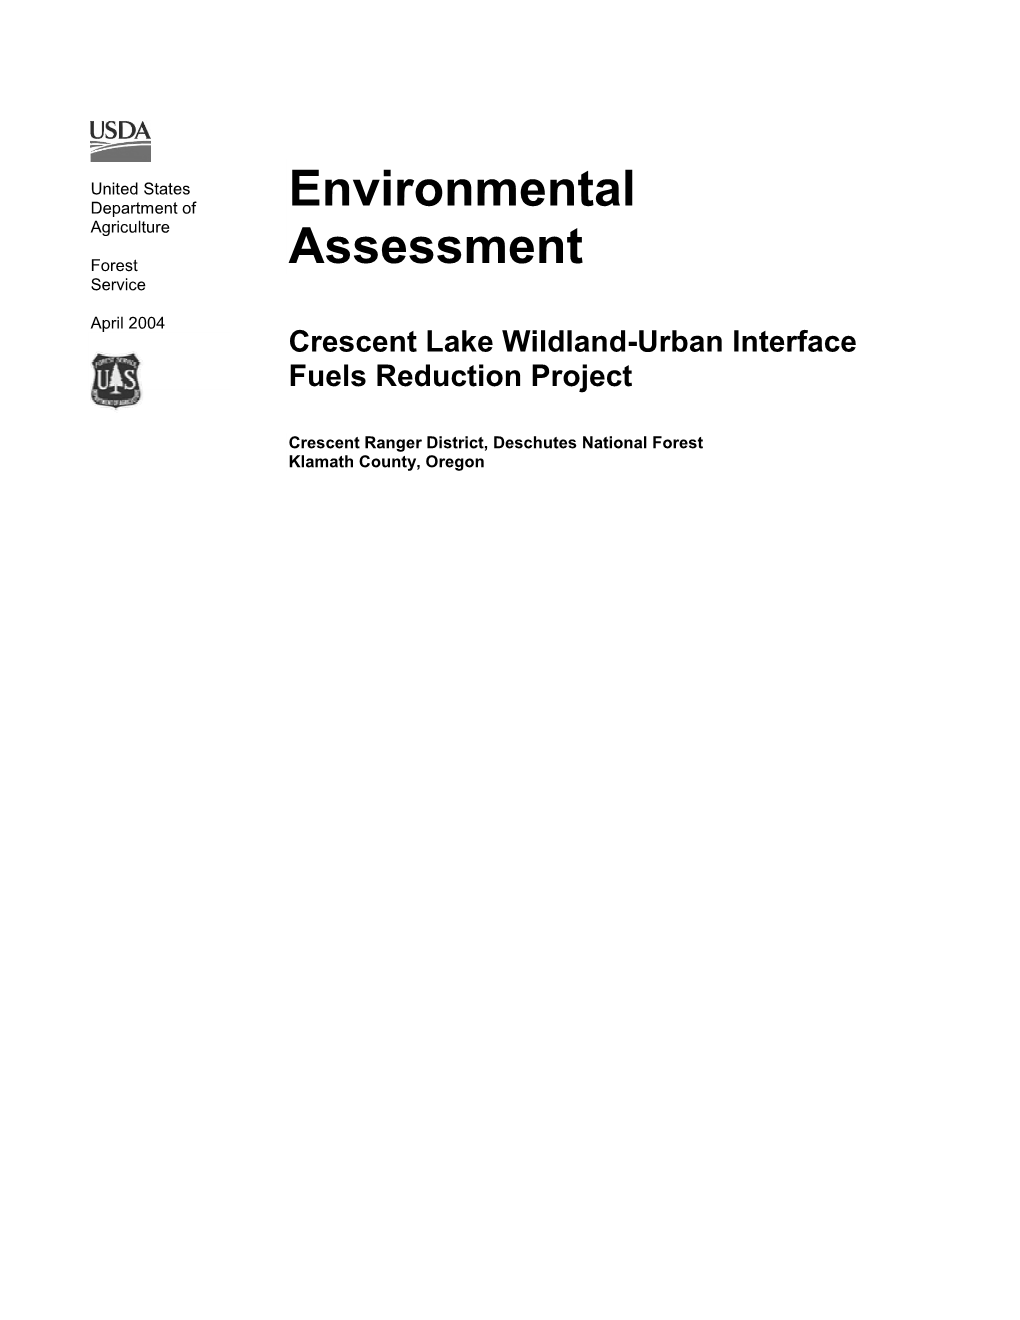 Environmental Assessment Crescent Lake